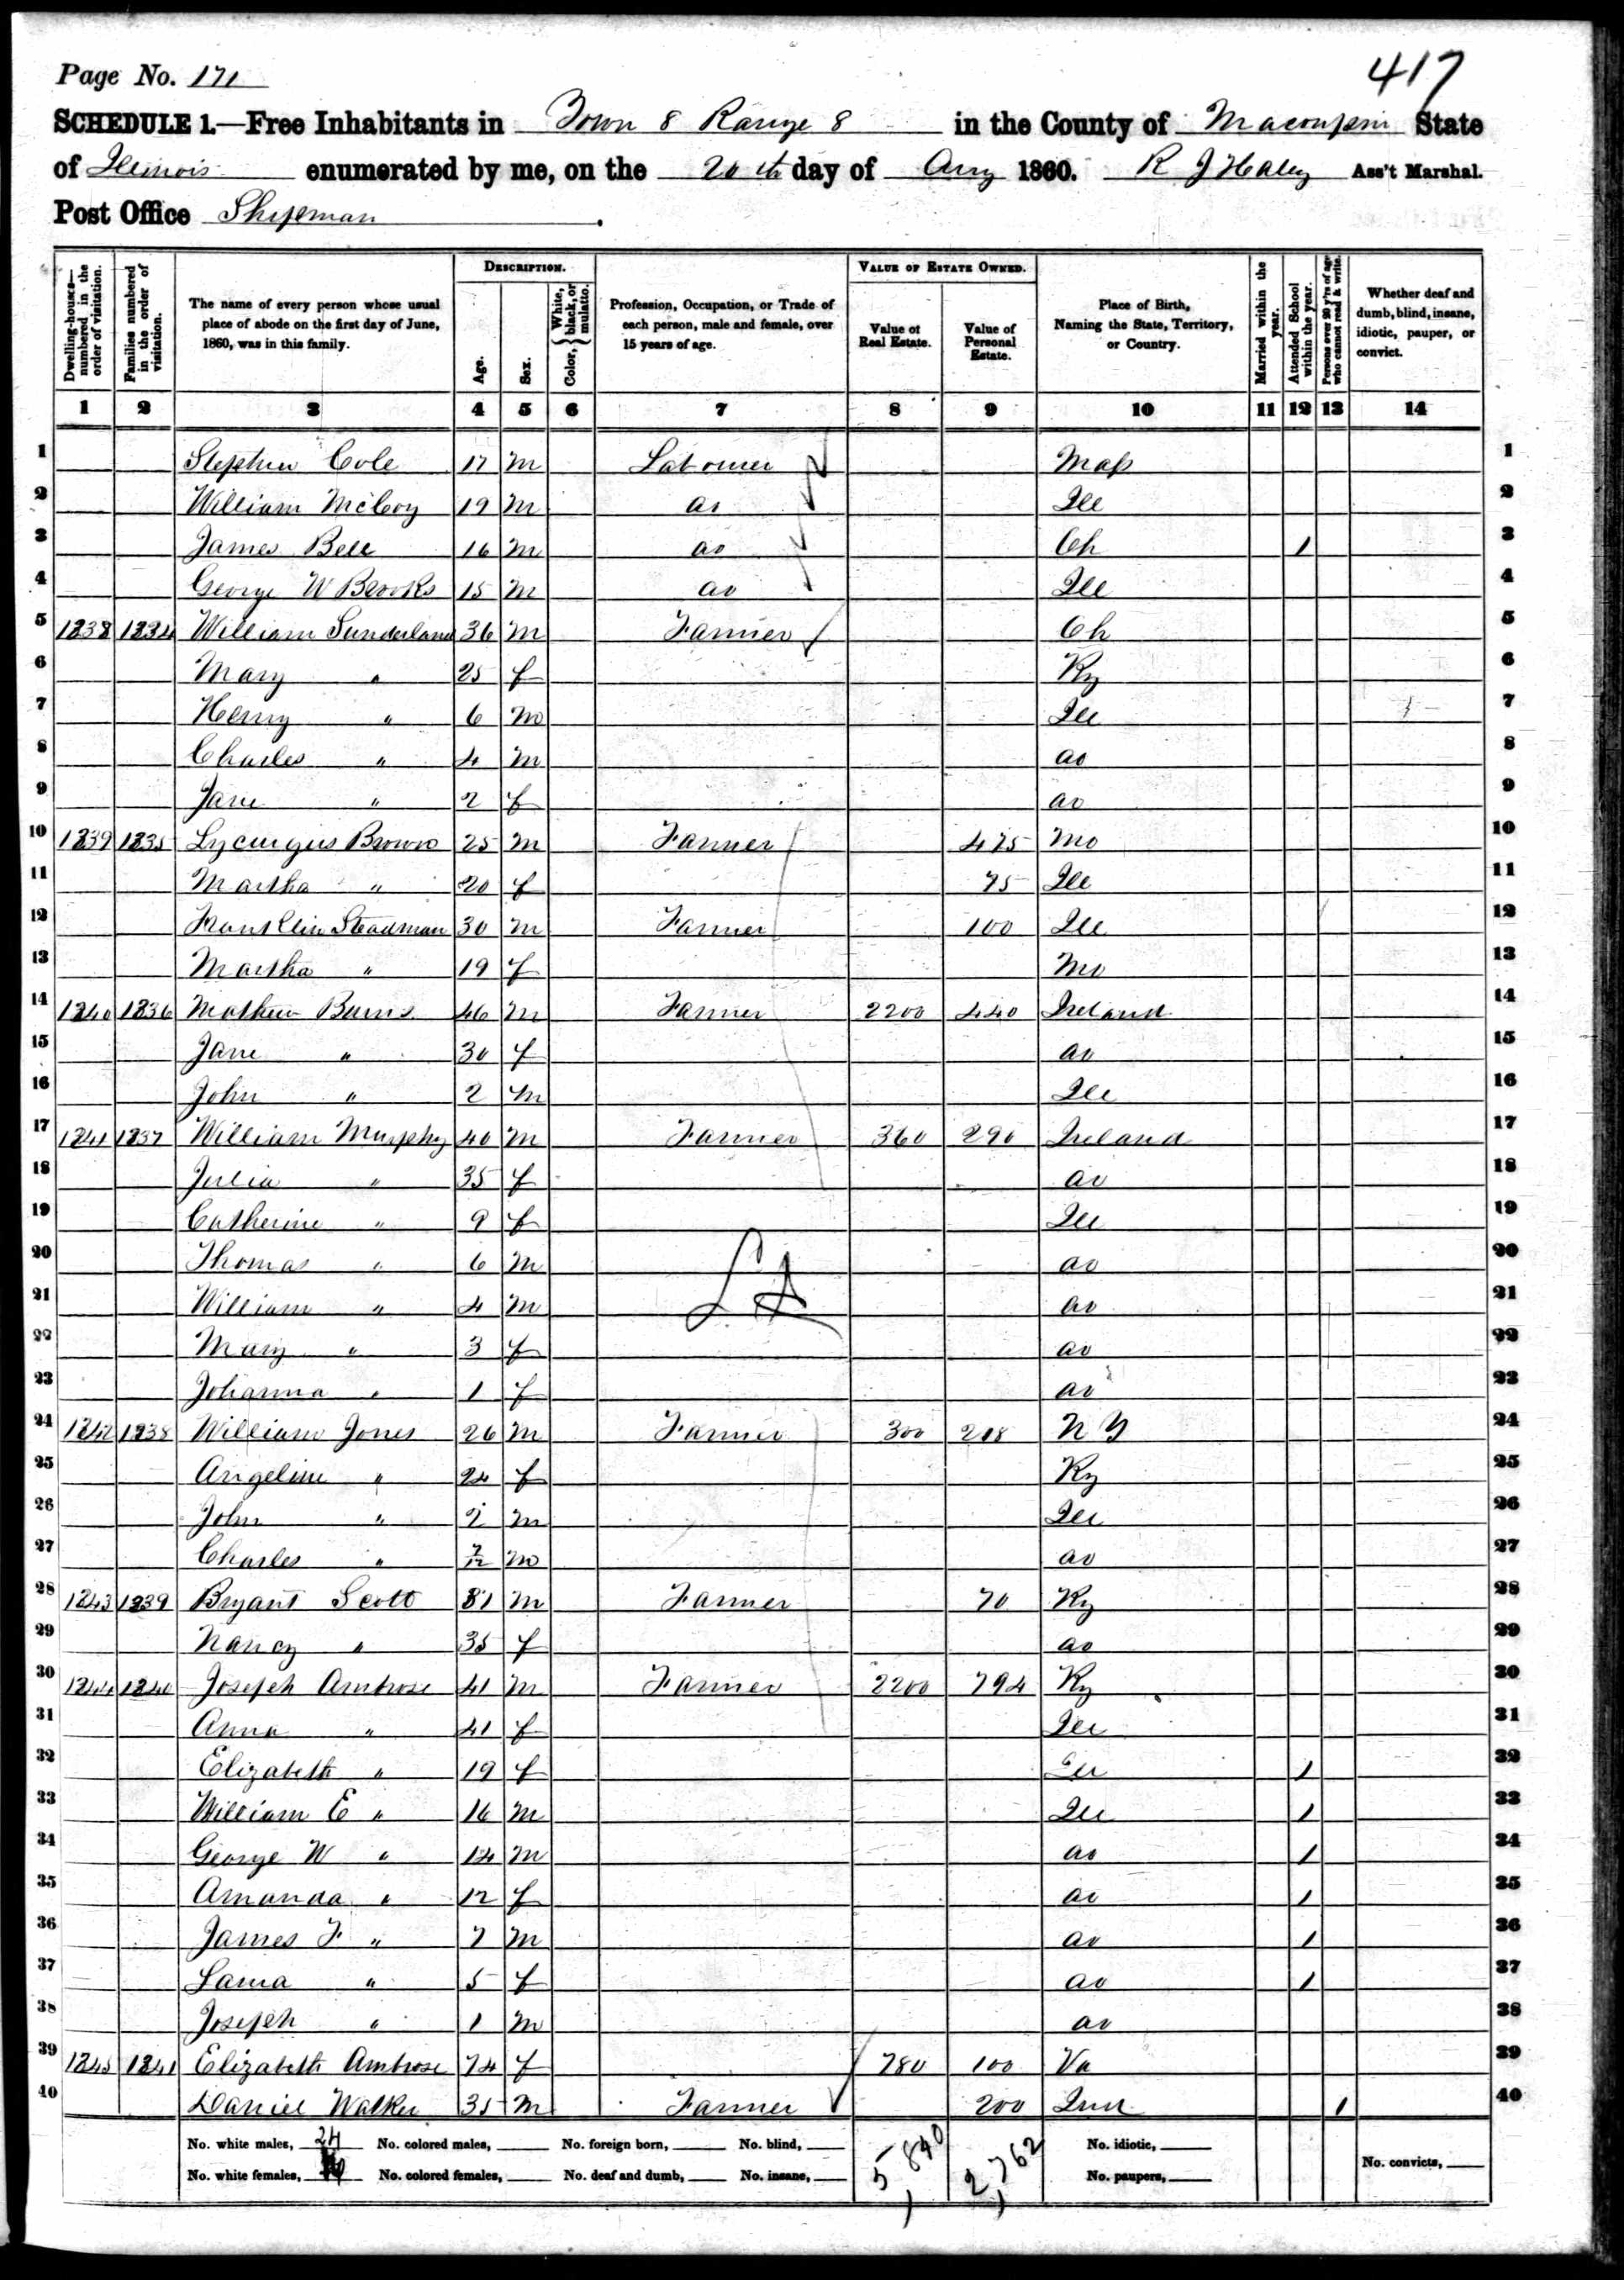 Daniel Walker, 1860 Macoupin County, Illinois, census